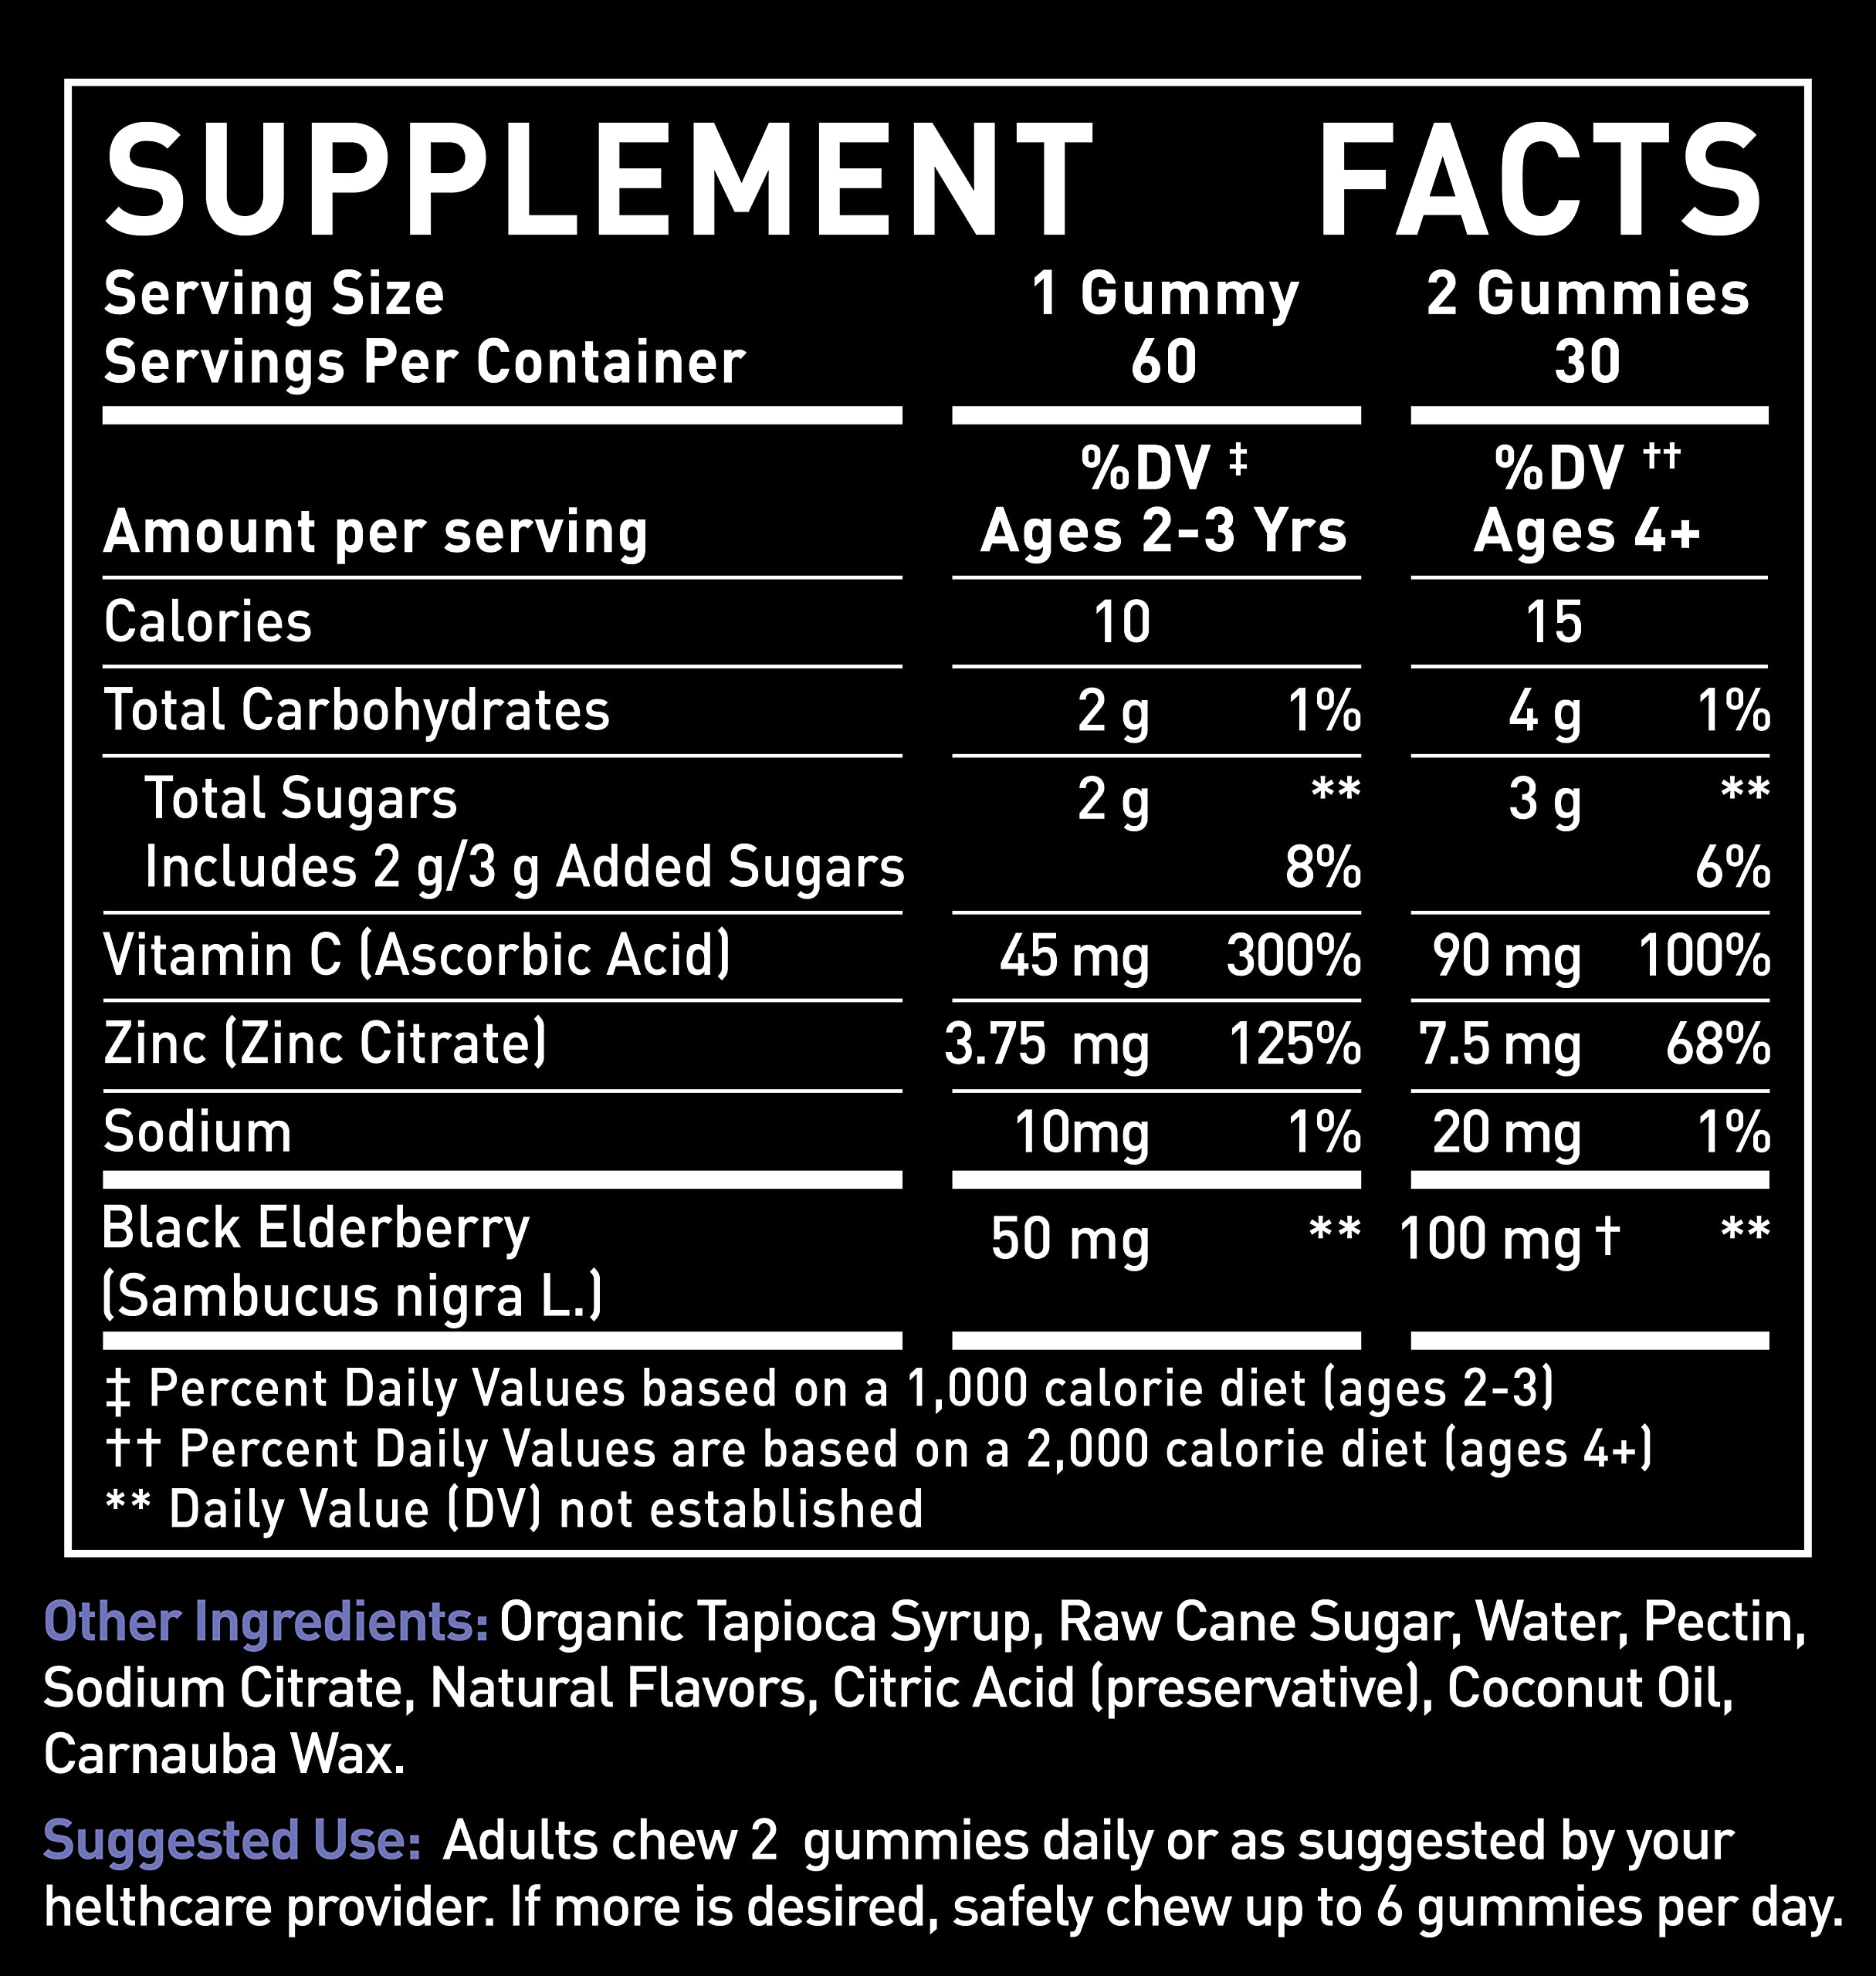 Zeal Naturals Sambucus Elderberry Gummies + Zinc + Vitamin C - Daily Supplement for Children & Adults - Easy to Chew Vitamin Gummies - 100 mg Max Serving of Elderberry - 60 Count